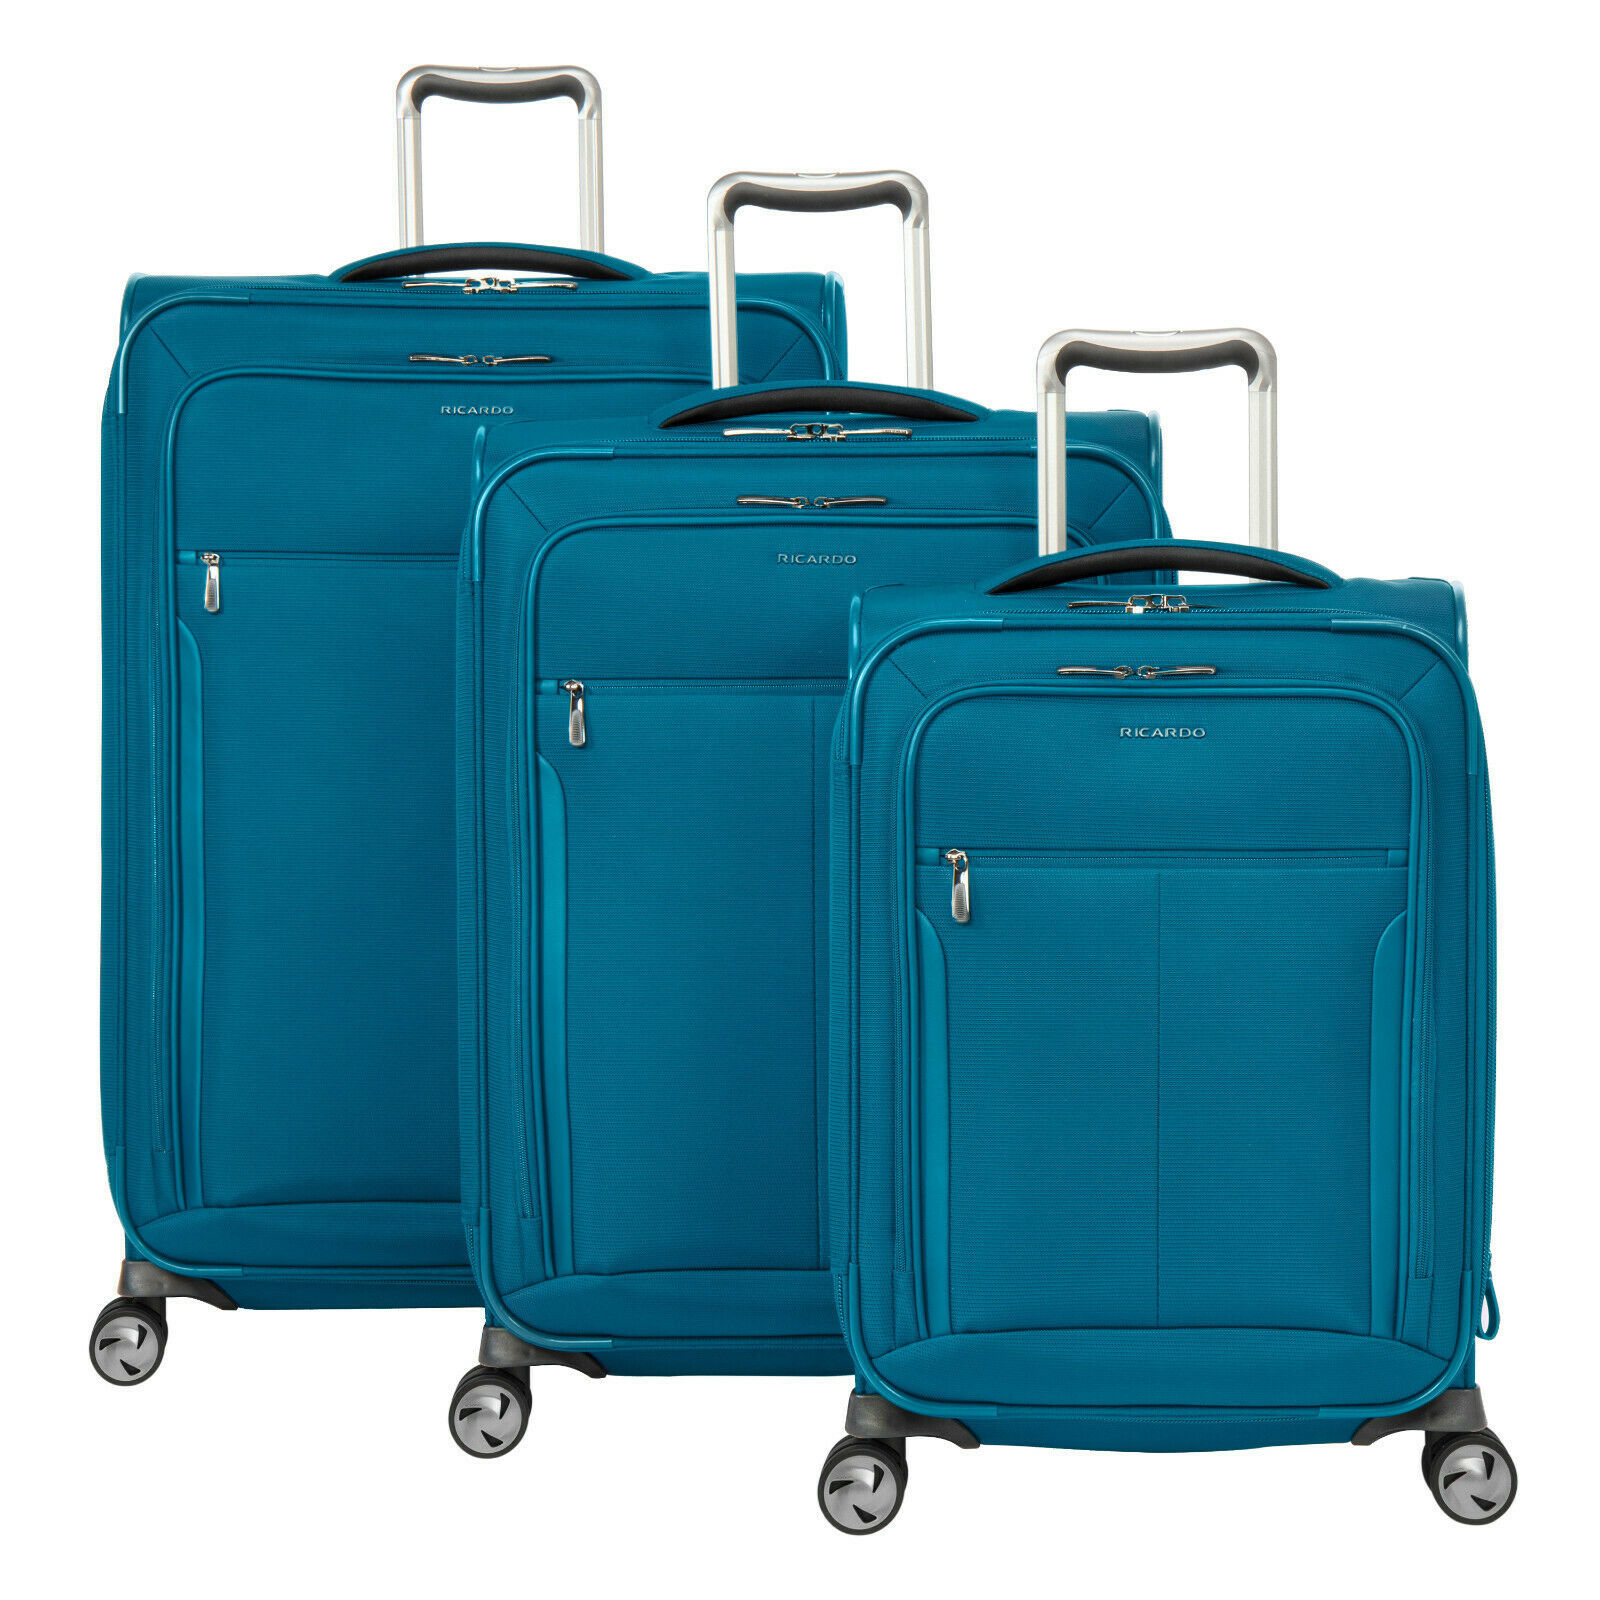 Ricardo Seahaven 2.0 Softside 3-Piece Luggage Set Rich Teal w/ Free Travel Kit